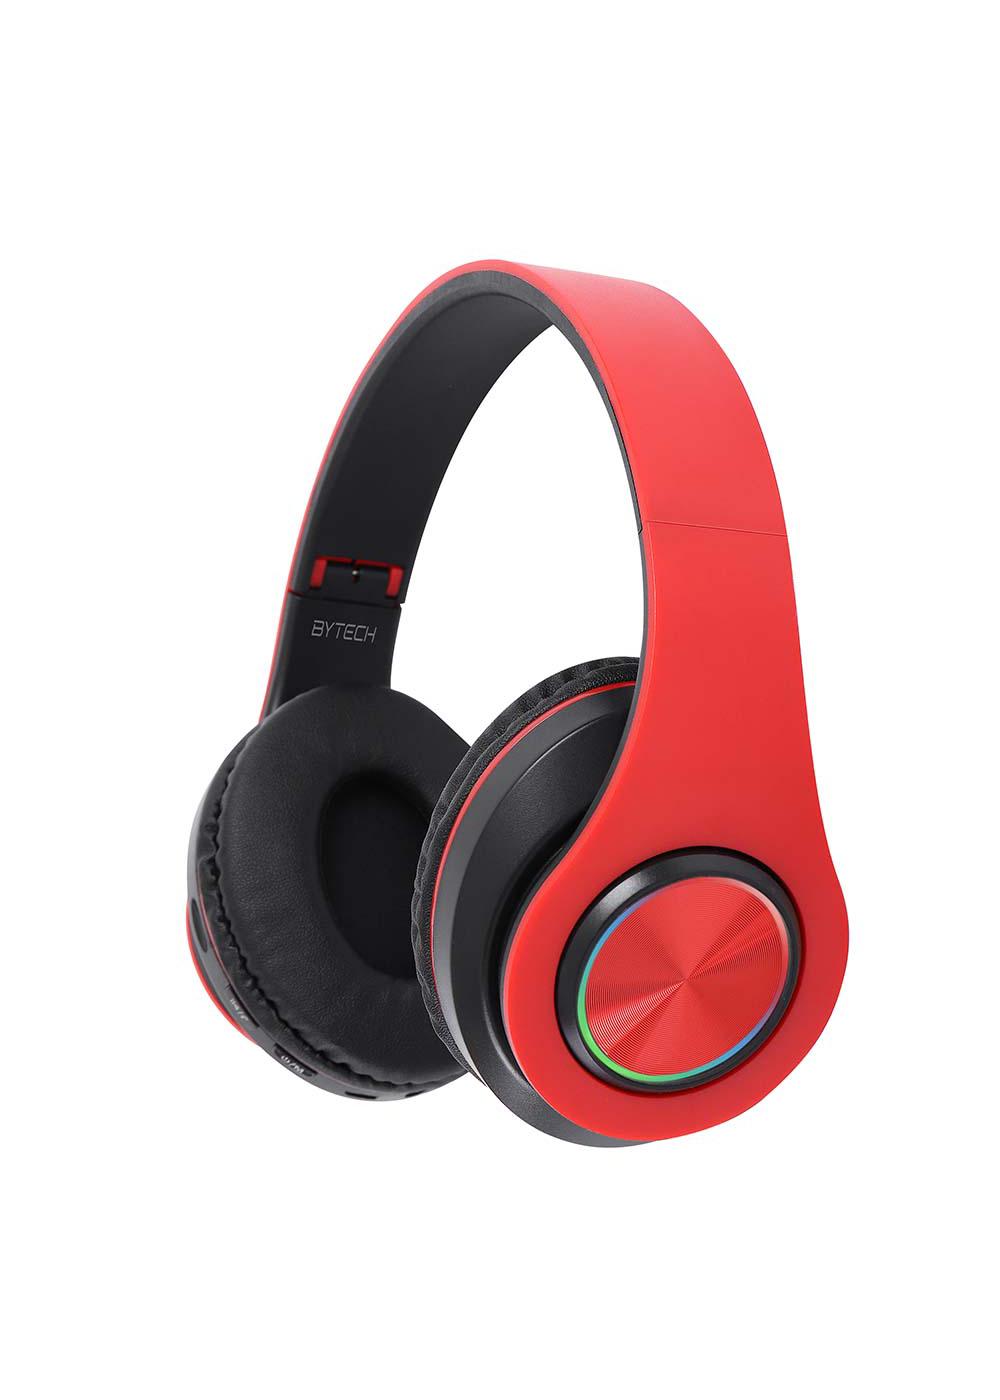 Bytech Wireless Headphones - Red & Black; image 2 of 2